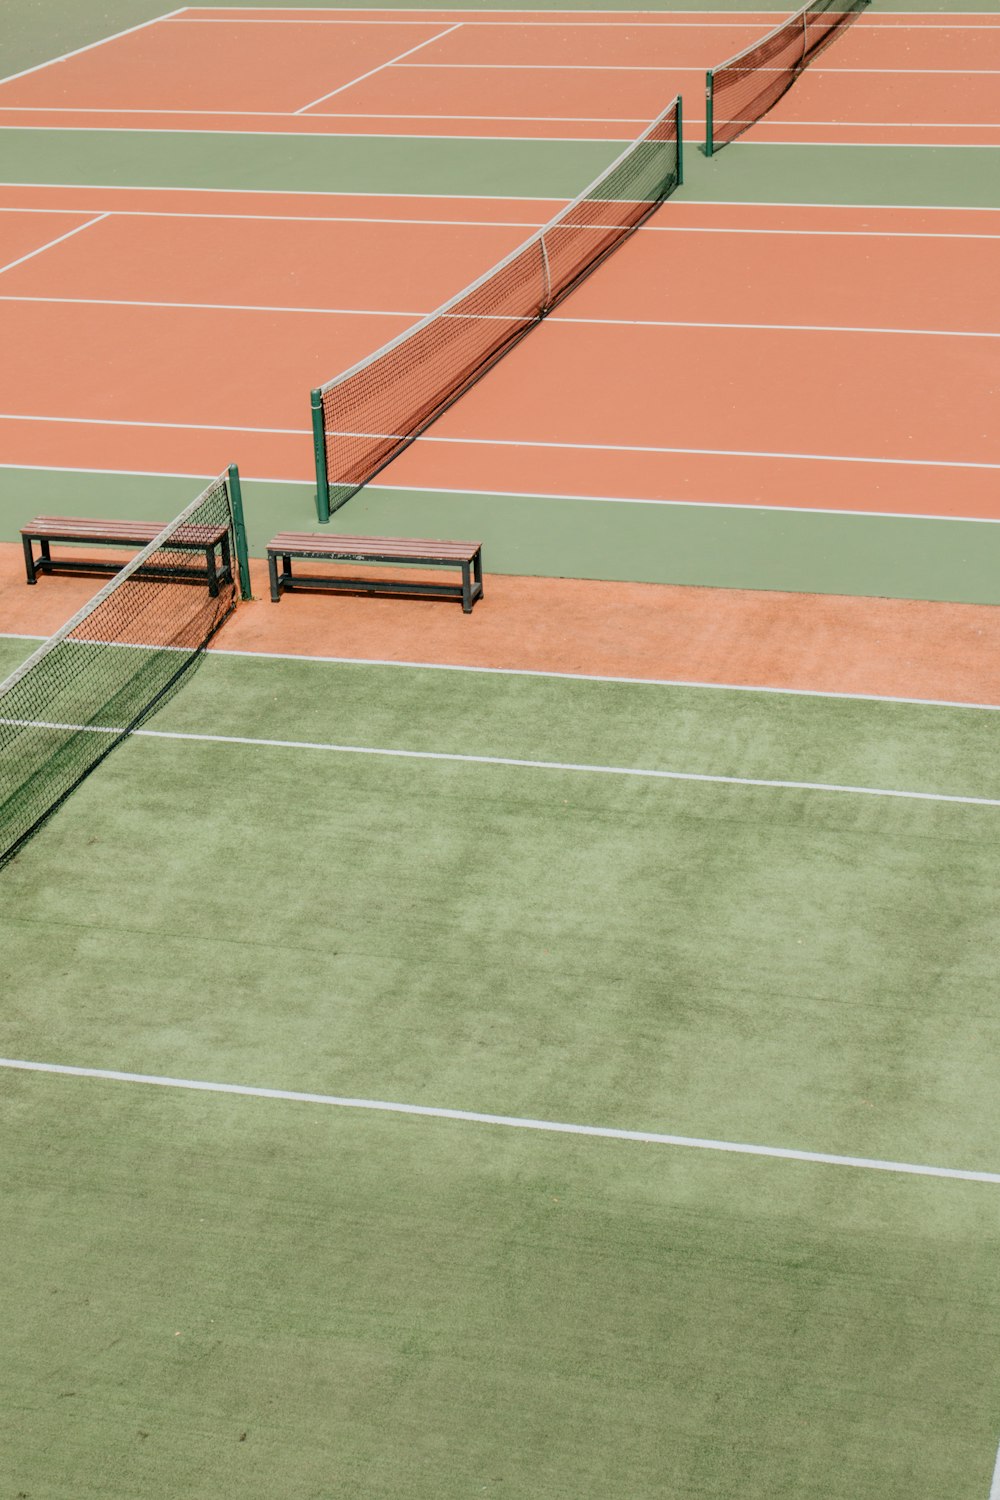 empty green and orange tennis fields